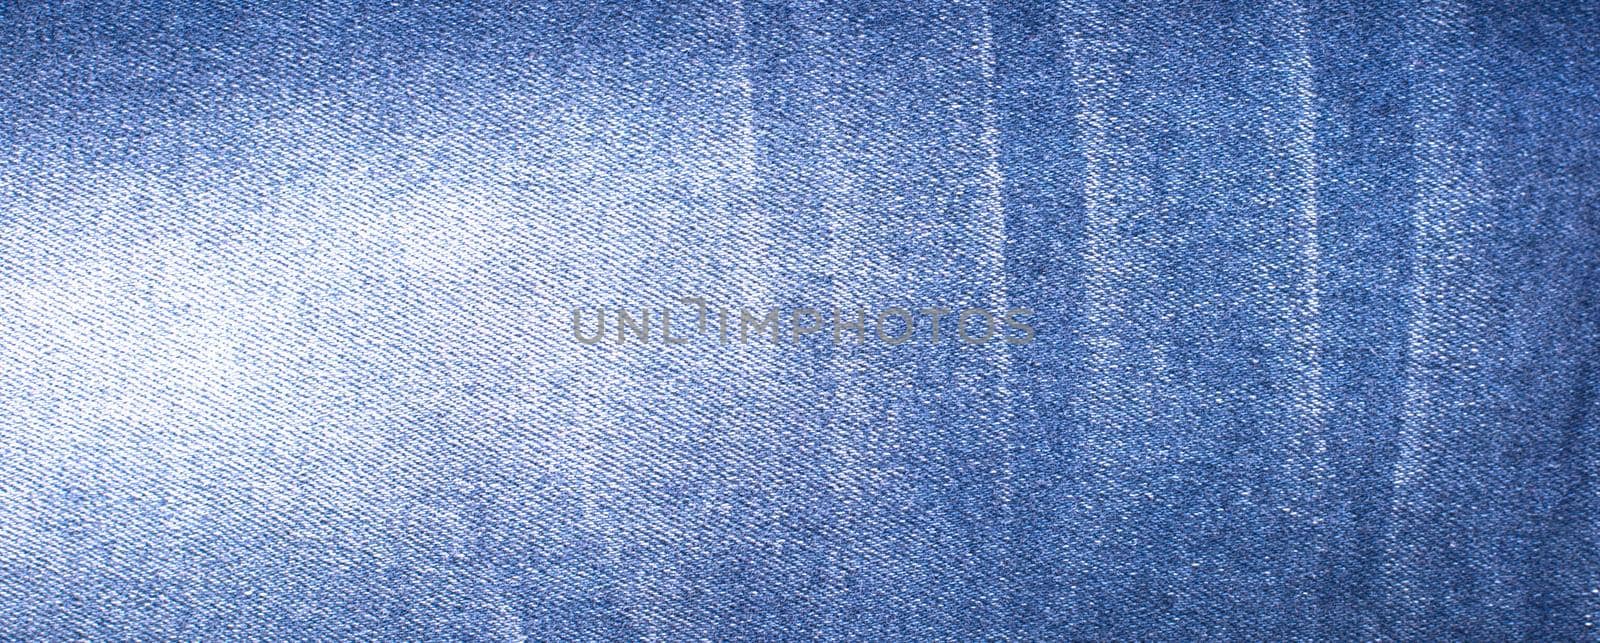 Background of denim blue texture jeans